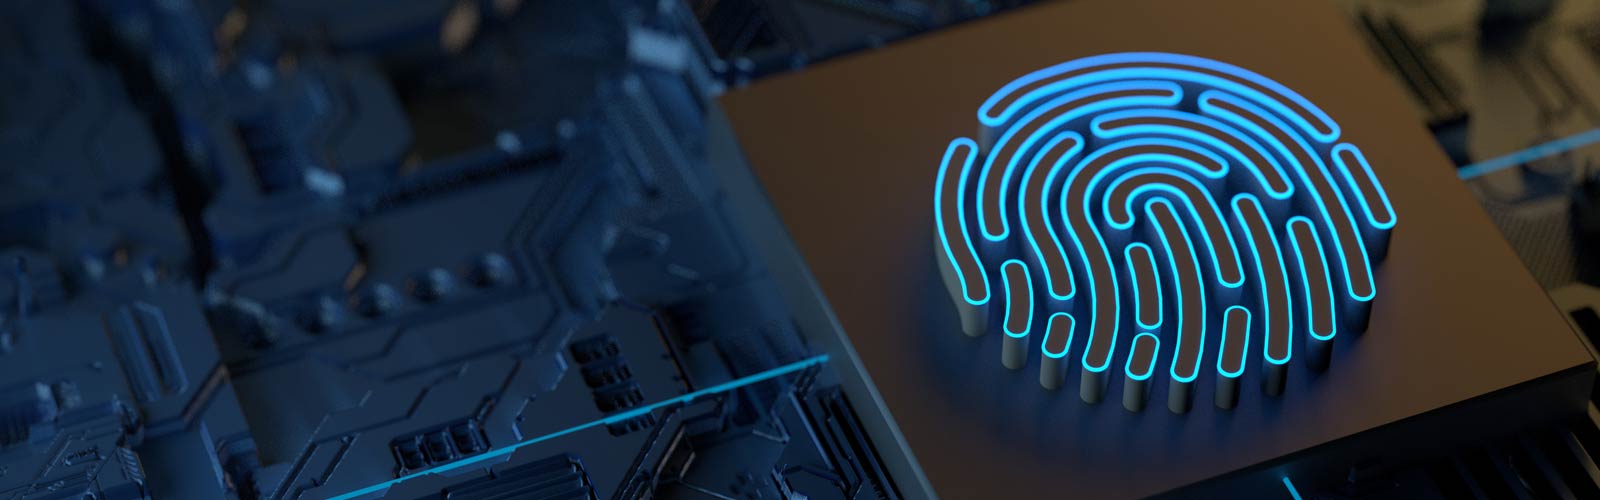 Digital components in shape of fingerprint